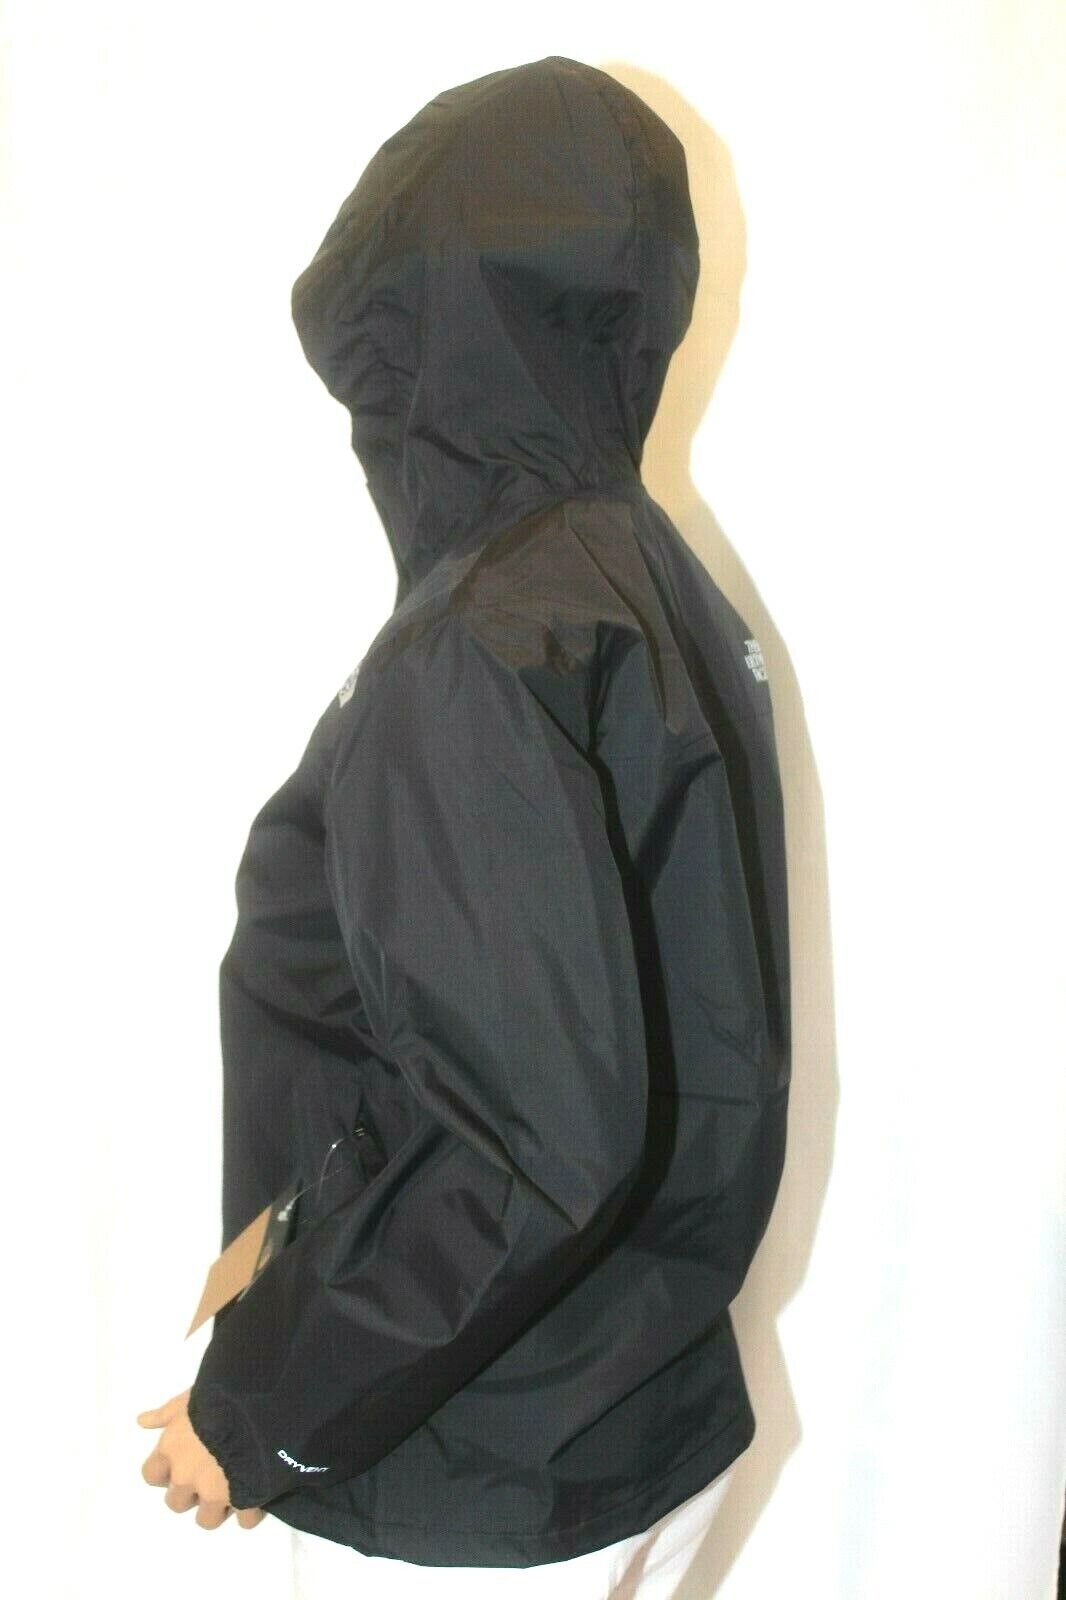 *NWT* $70. North Face Resolve Reflective Girls Black Rain Jacket HyVent Hood =LG